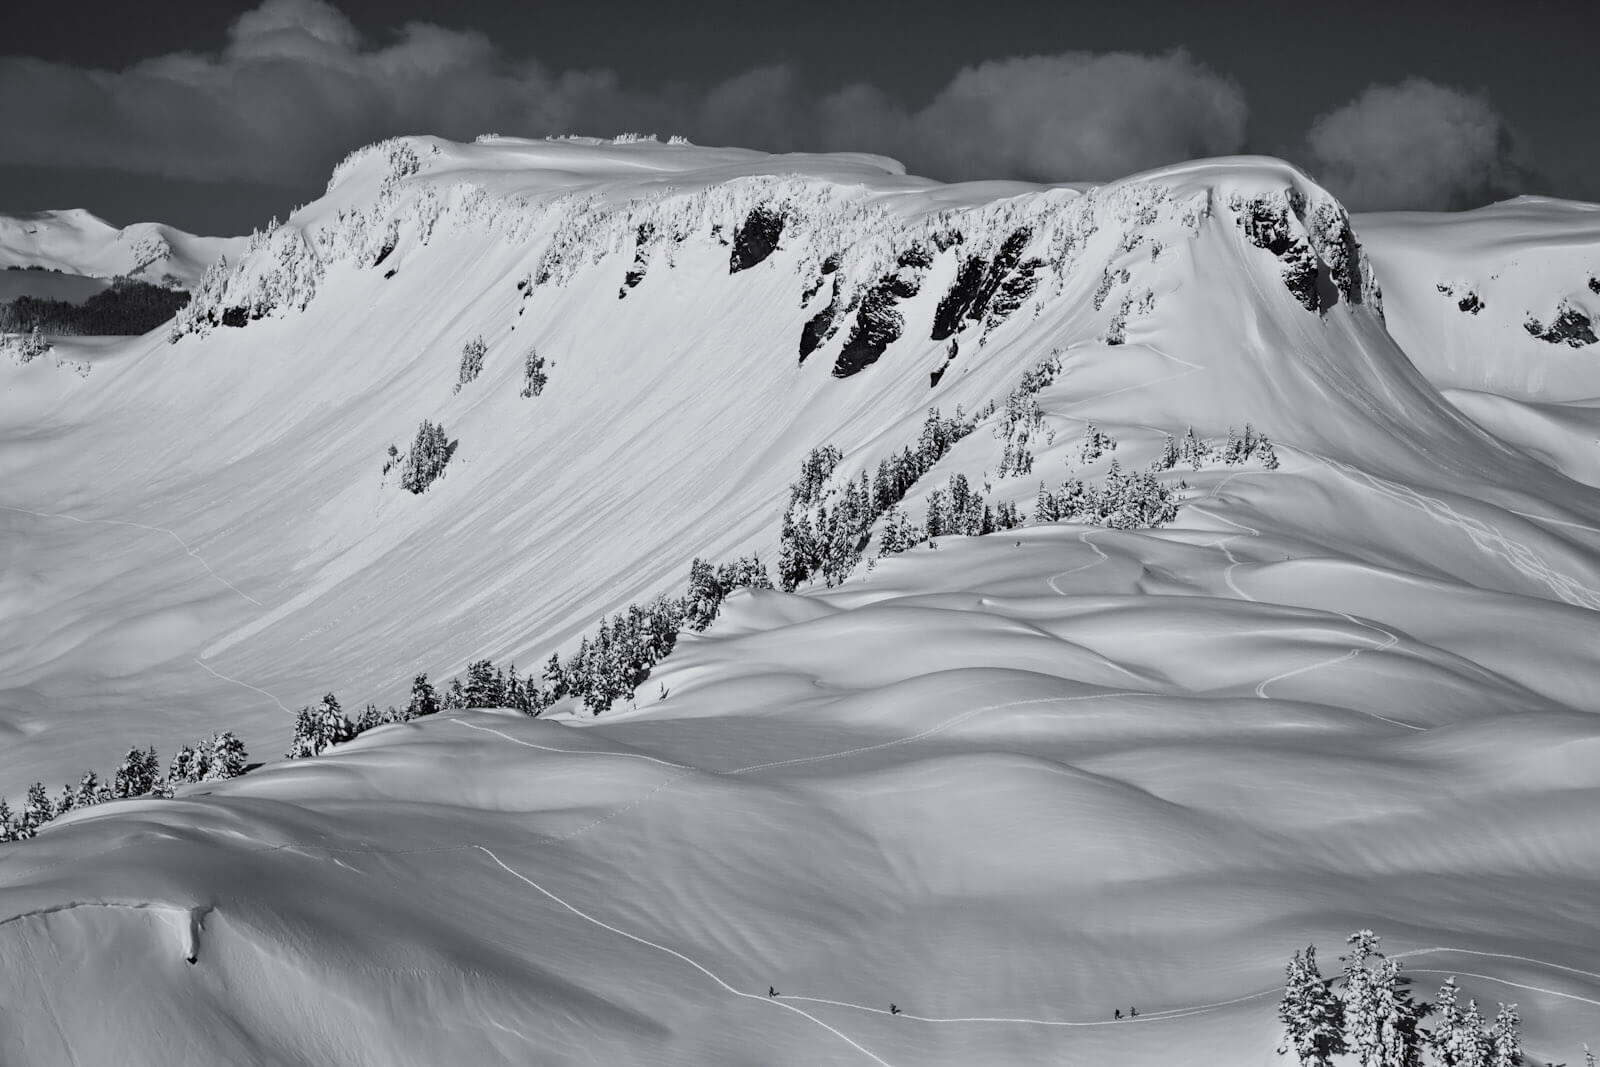 John Scurlock photo of the Mount Baker ski touring near Highway 542